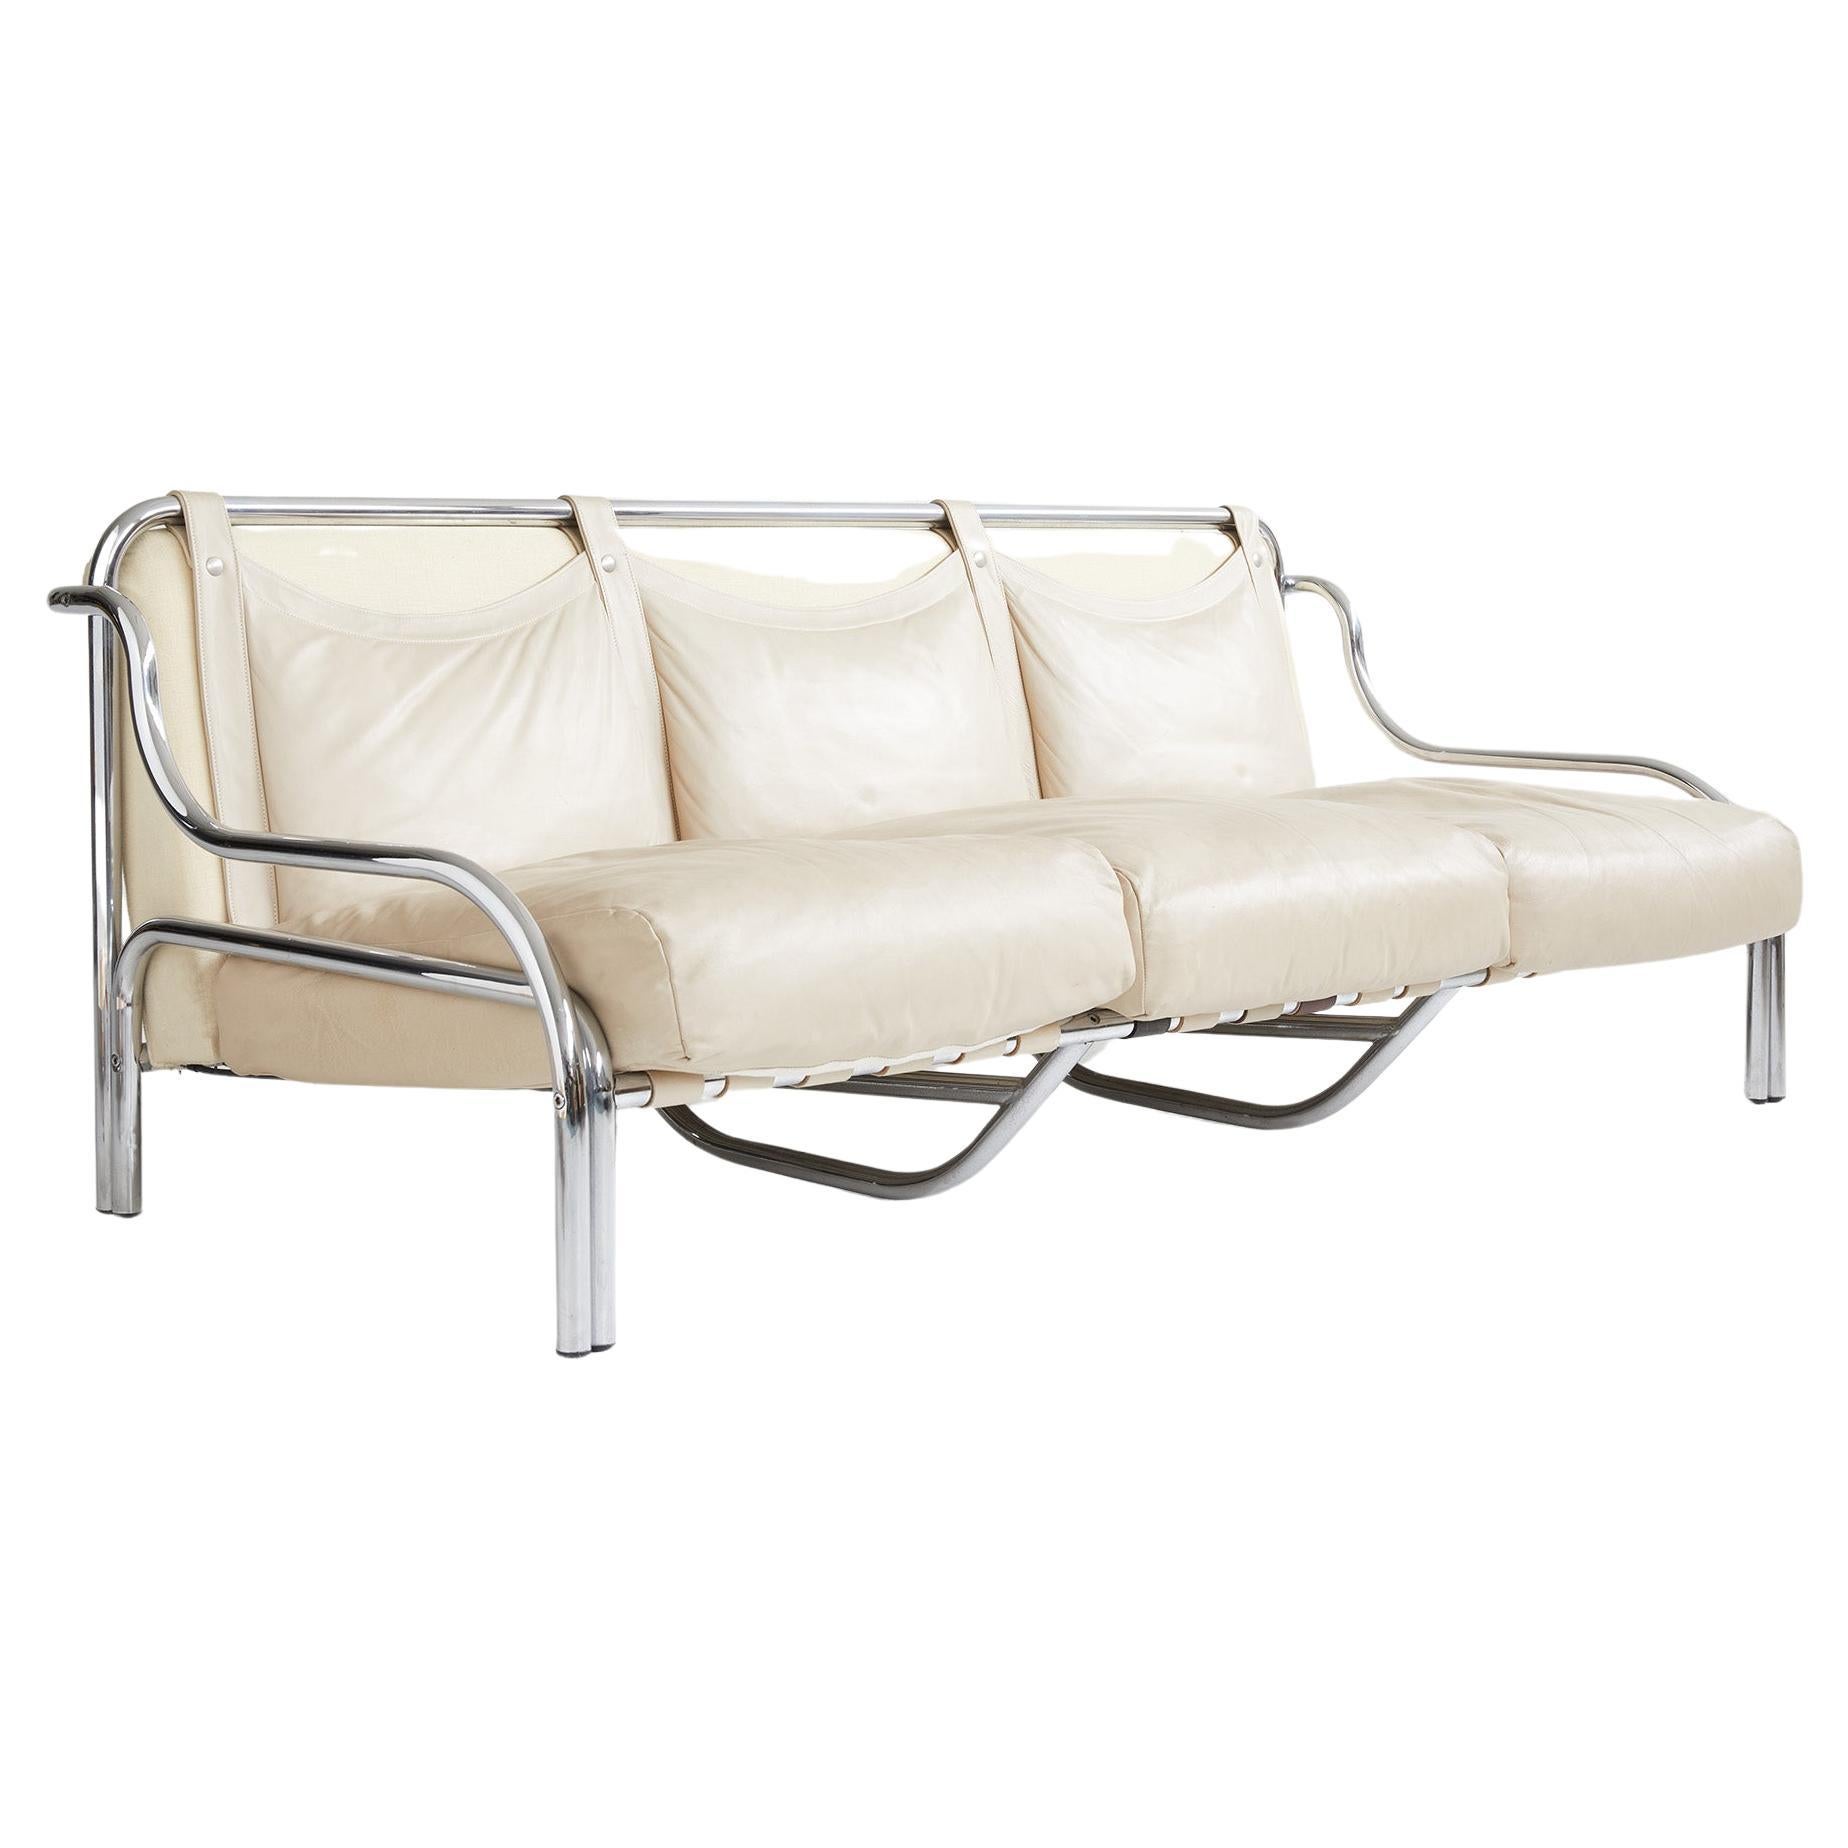 Dreisitziges Leders Sofa „Stringa“ von Gae Aulenti für Poltronova, Italien 1962 im Angebot